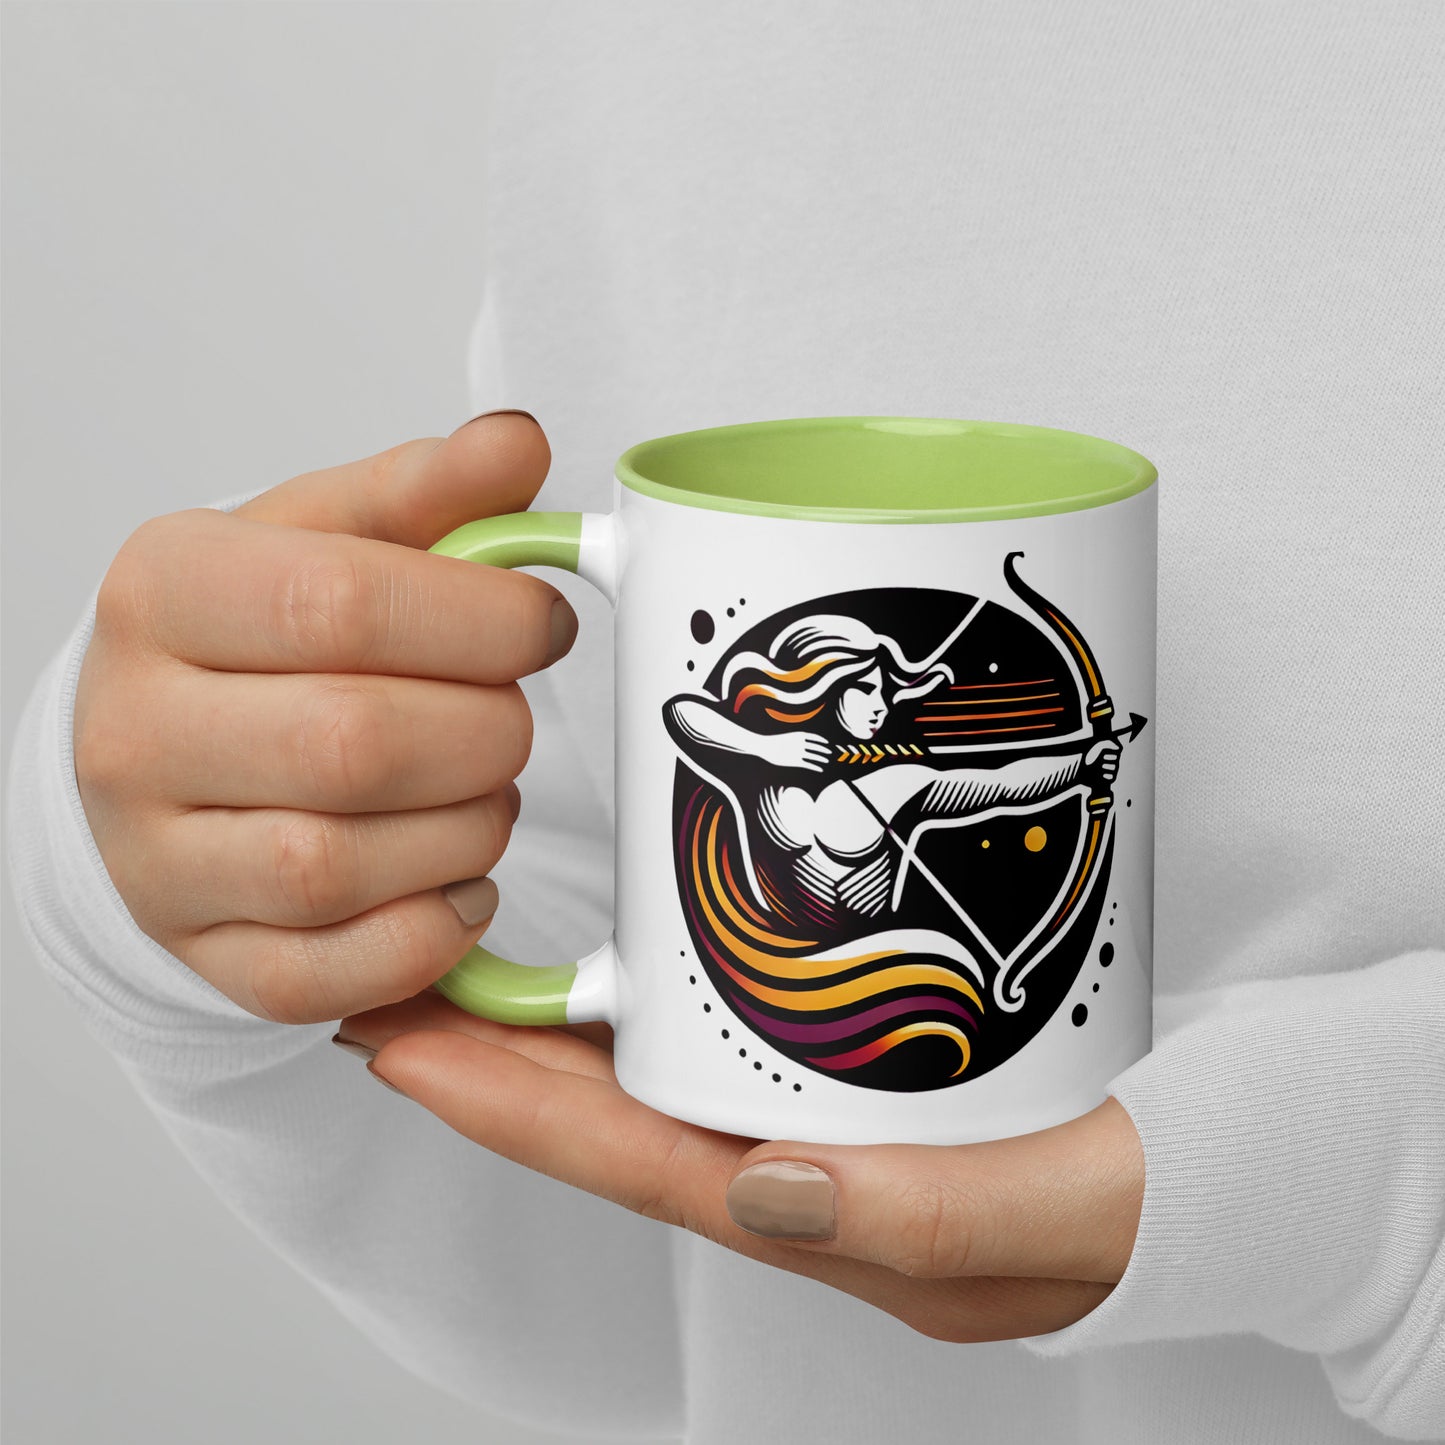 Adventor Mug with Color Inside